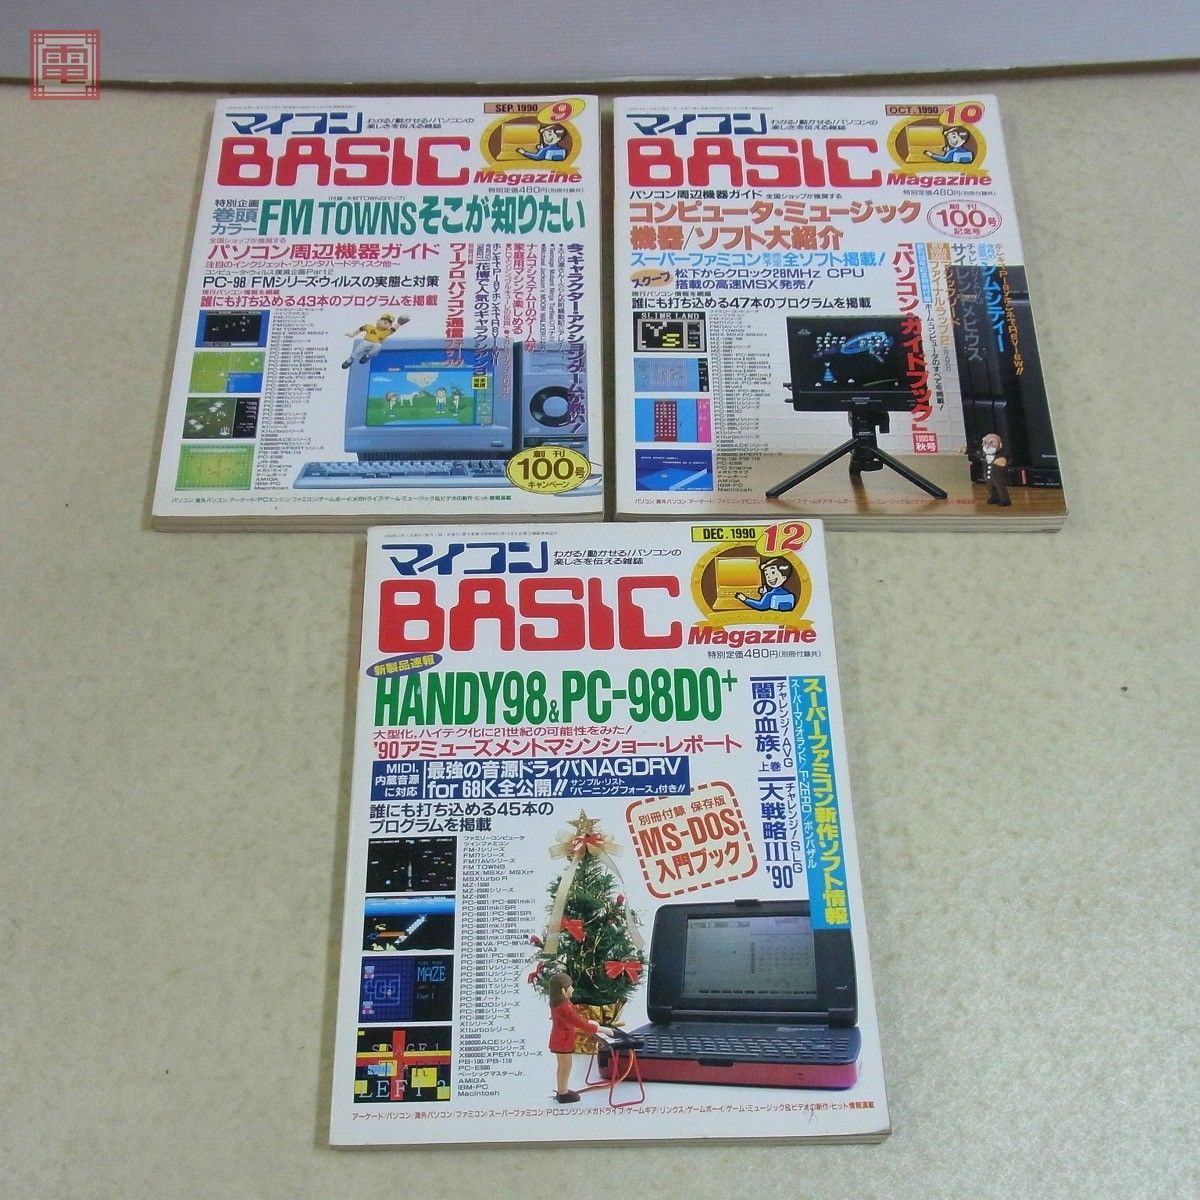  журнал microcomputer BASIC журнал 1990 год 11 шт. комплект не комплект беж maga радиоволны газета фирма [20